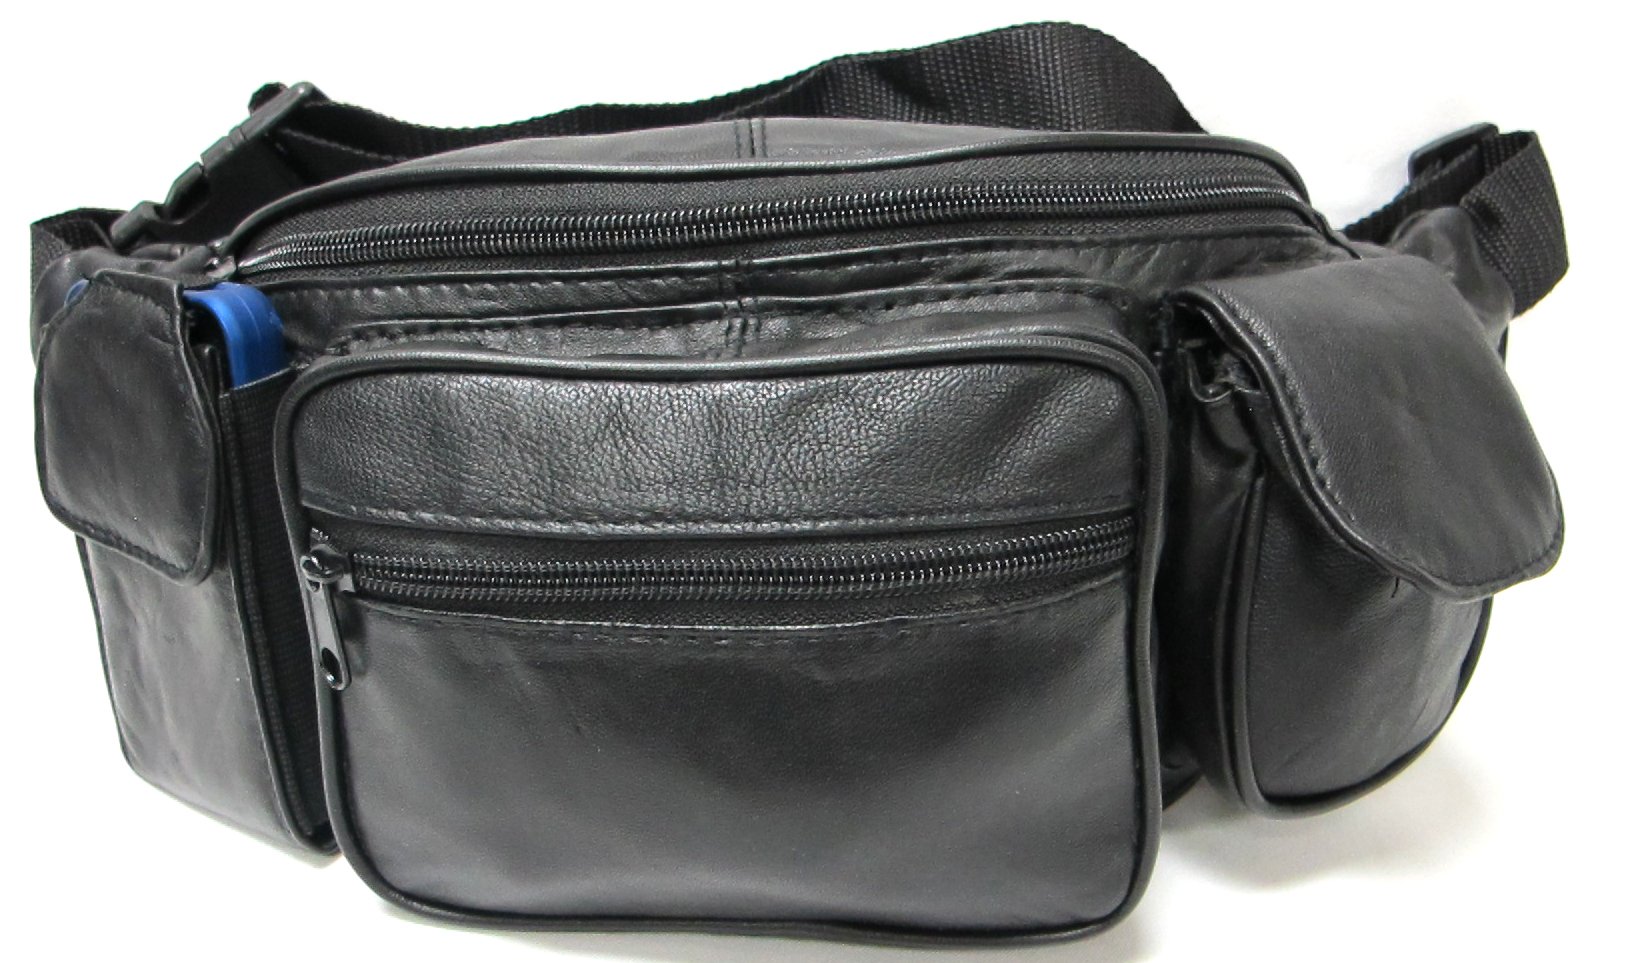 Deluxe Jumbo Size Genuine Leather Waist Pack Soft Light Weight w/Organizer - Black